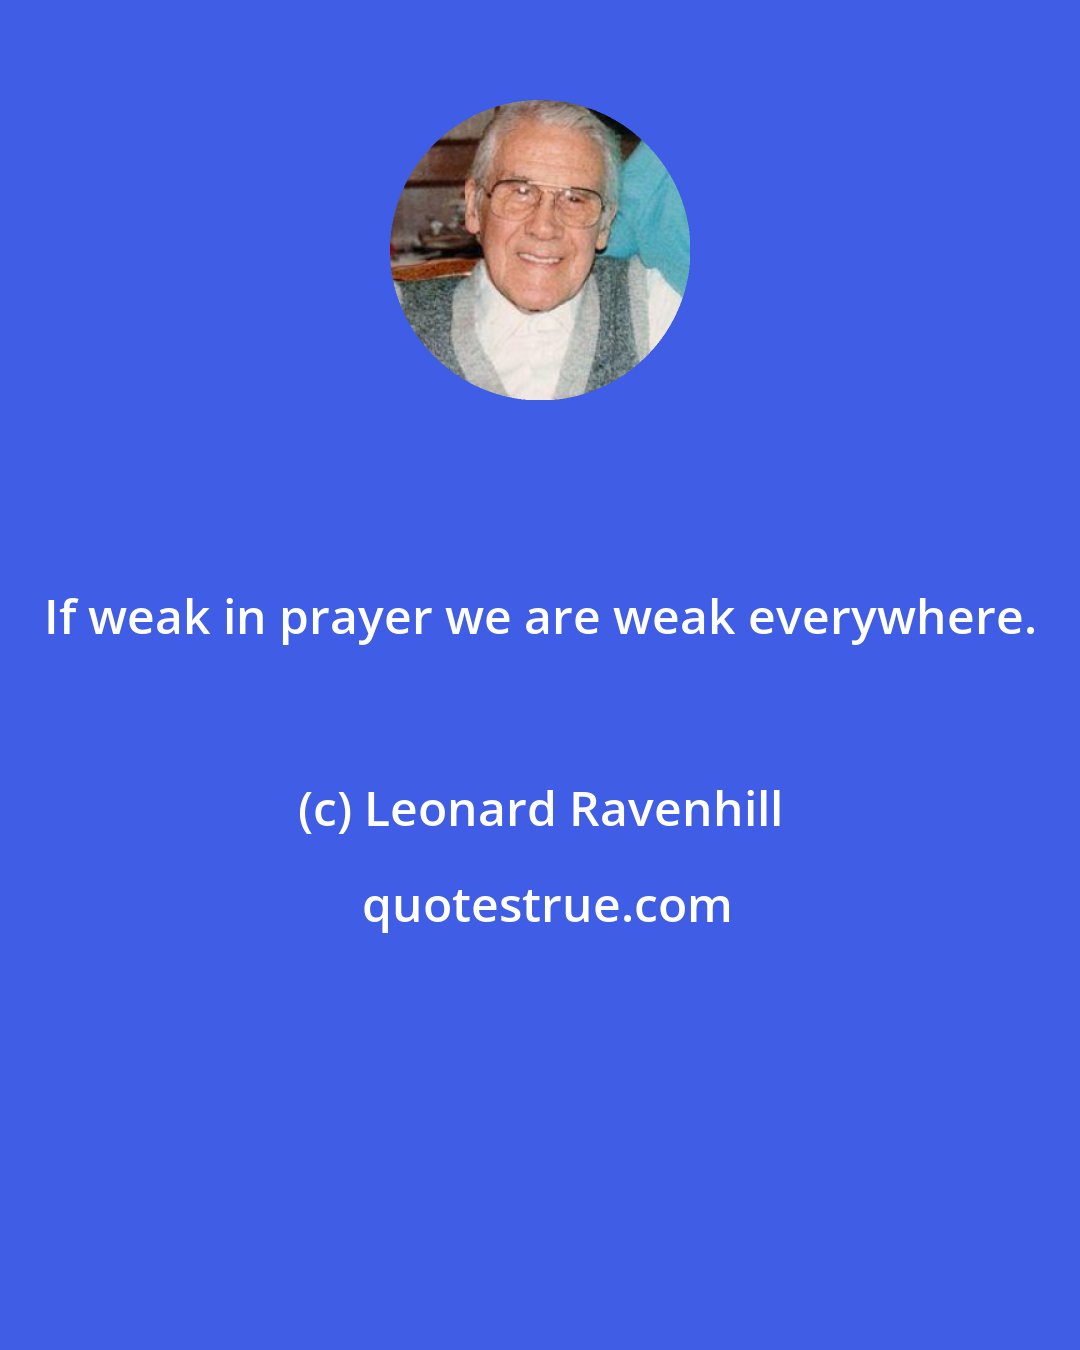 Leonard Ravenhill: If weak in prayer we are weak everywhere.